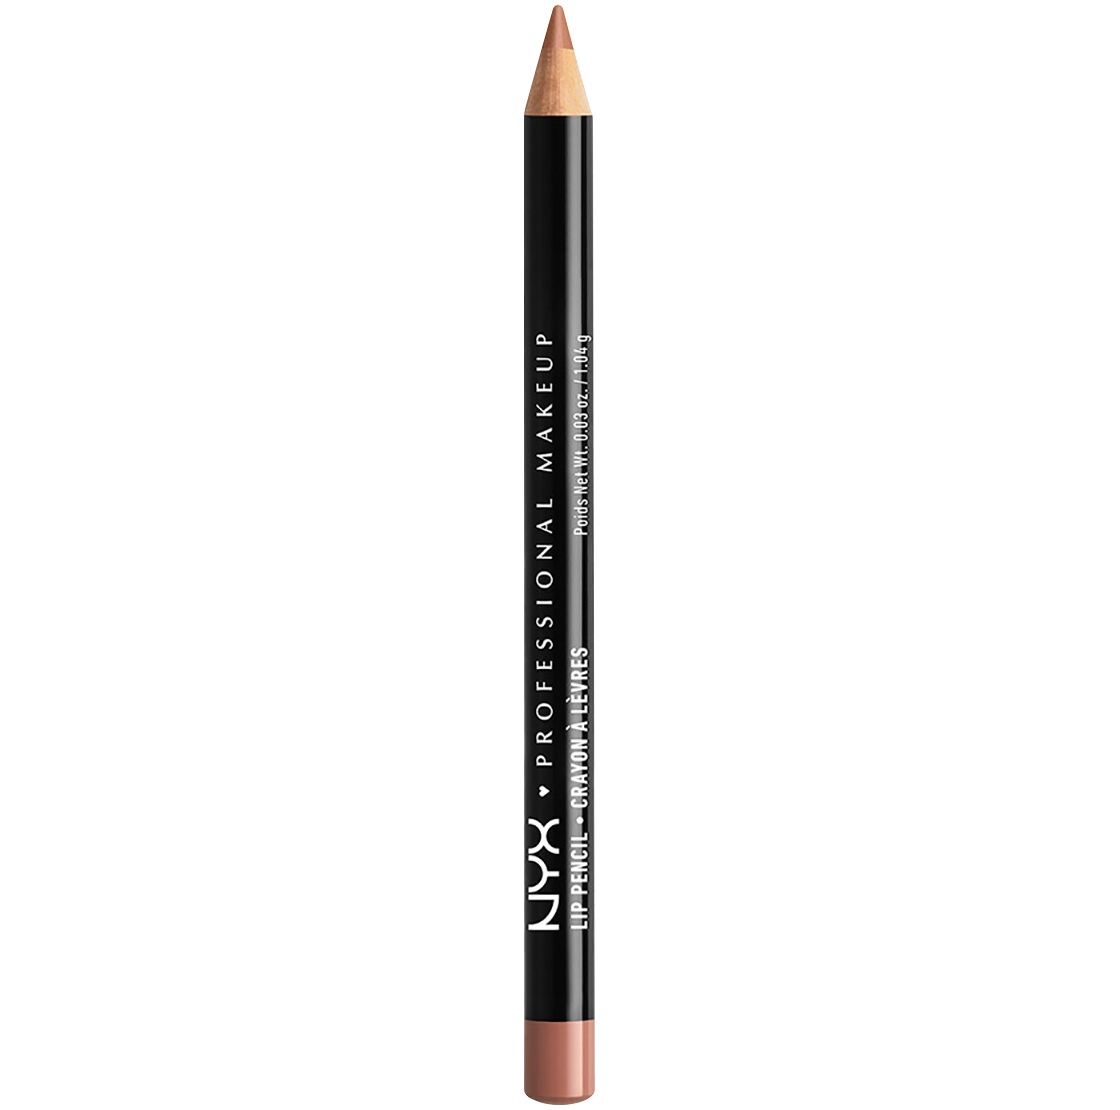 Натуральный карандаш для губ Nyx Professional Makeup Slide On, 1 гр nyx lip pencil slim 58 nude pink 0 03 oz 1 04 g